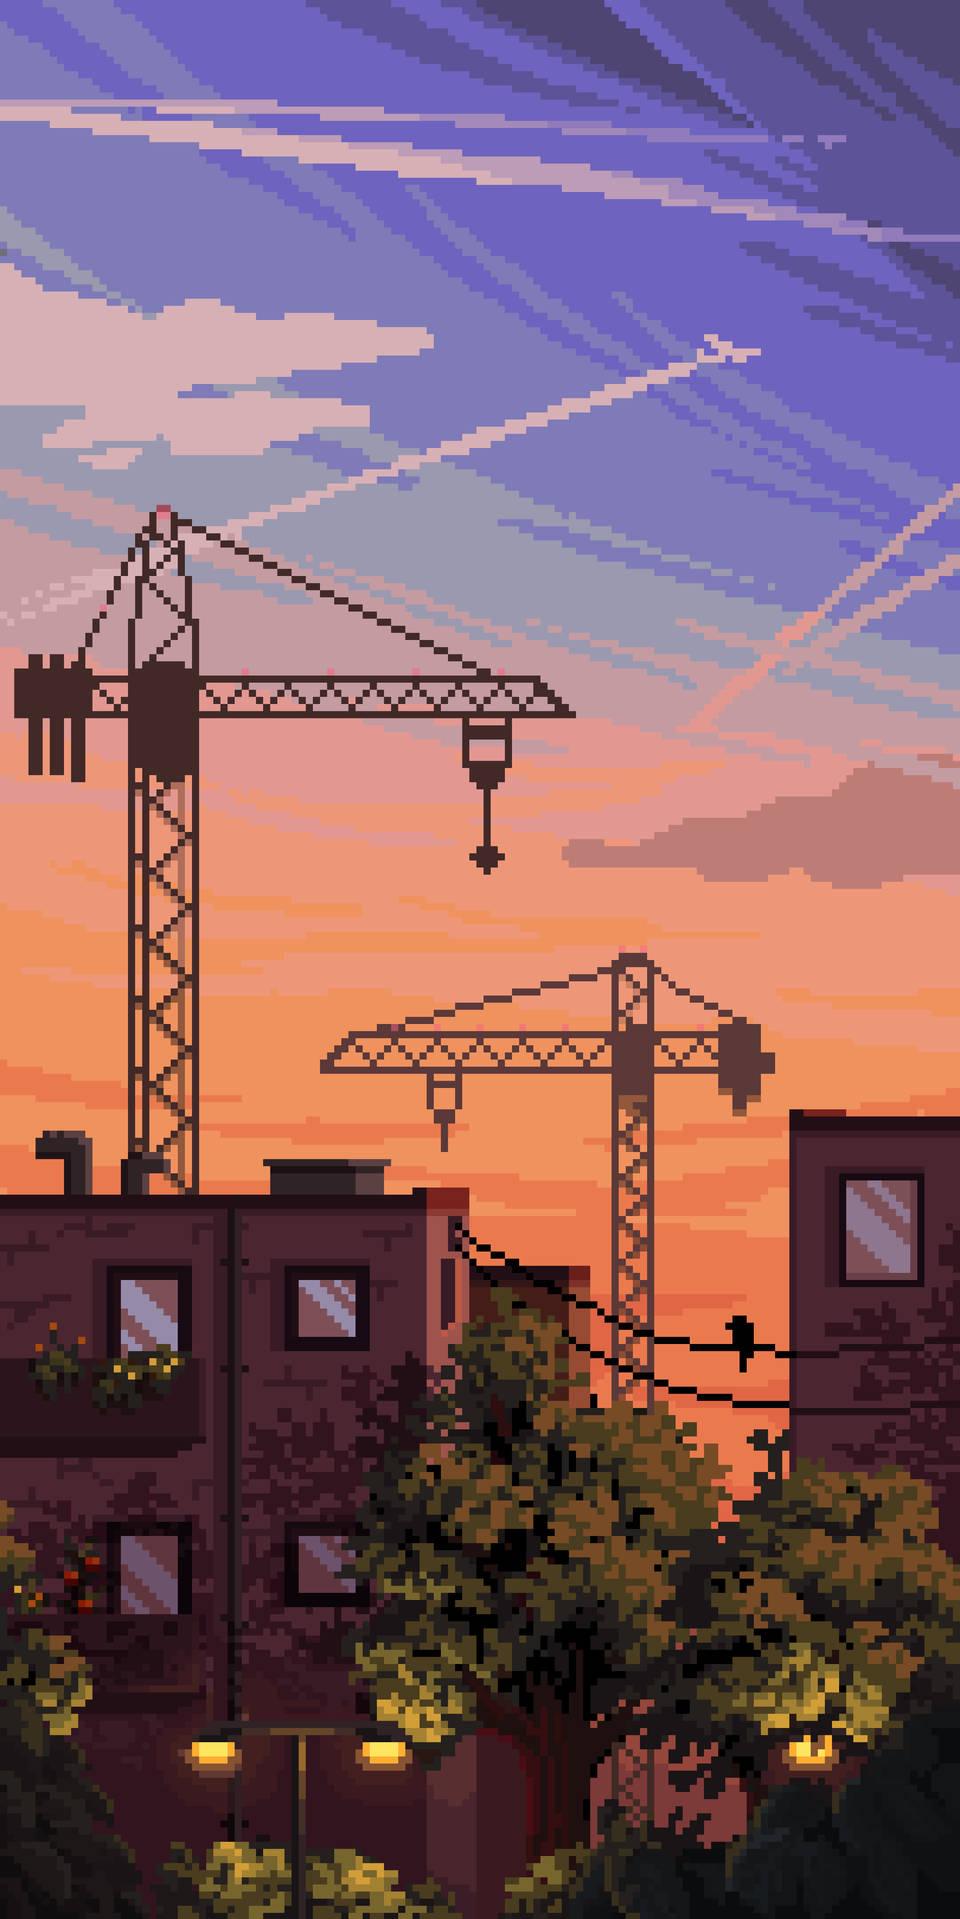 Buildings And Tower Cranes In Aesthetic Pixel Art